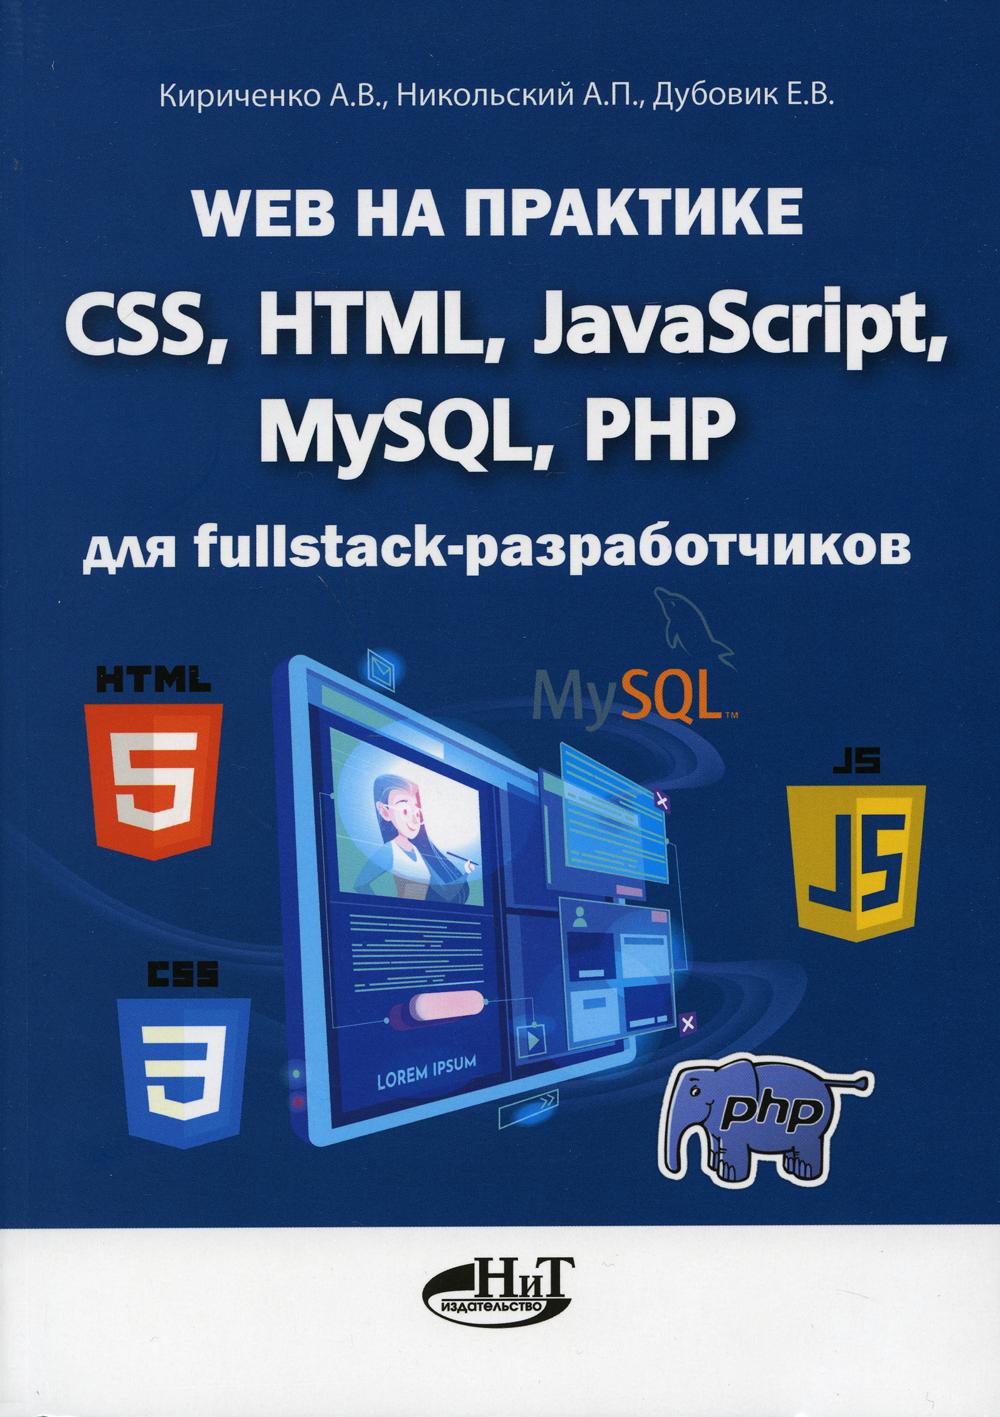 Web  . CSS, HTML, JavaScript, MySQL, PHP  fullstack-